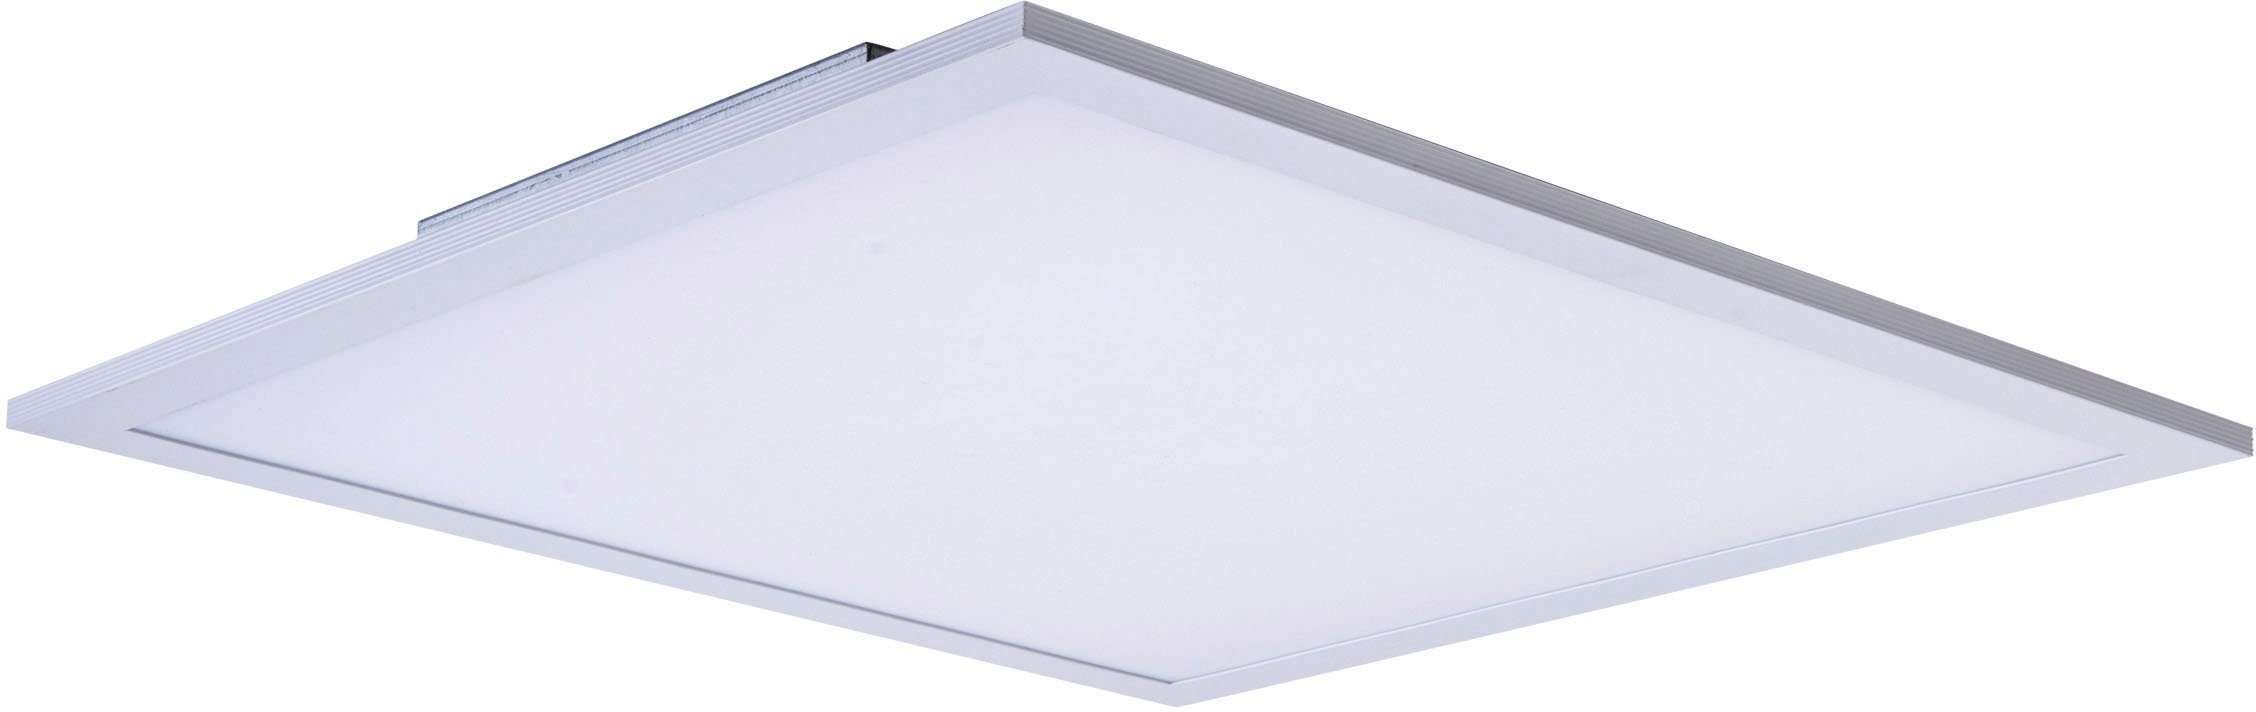 näve LED Panel Nicola, LED Neutralweiß, H: Lichtfarbe LED, 45x45cm, 6cm, integriert, Aufbaupanel 120 neutralweiß weiß fest